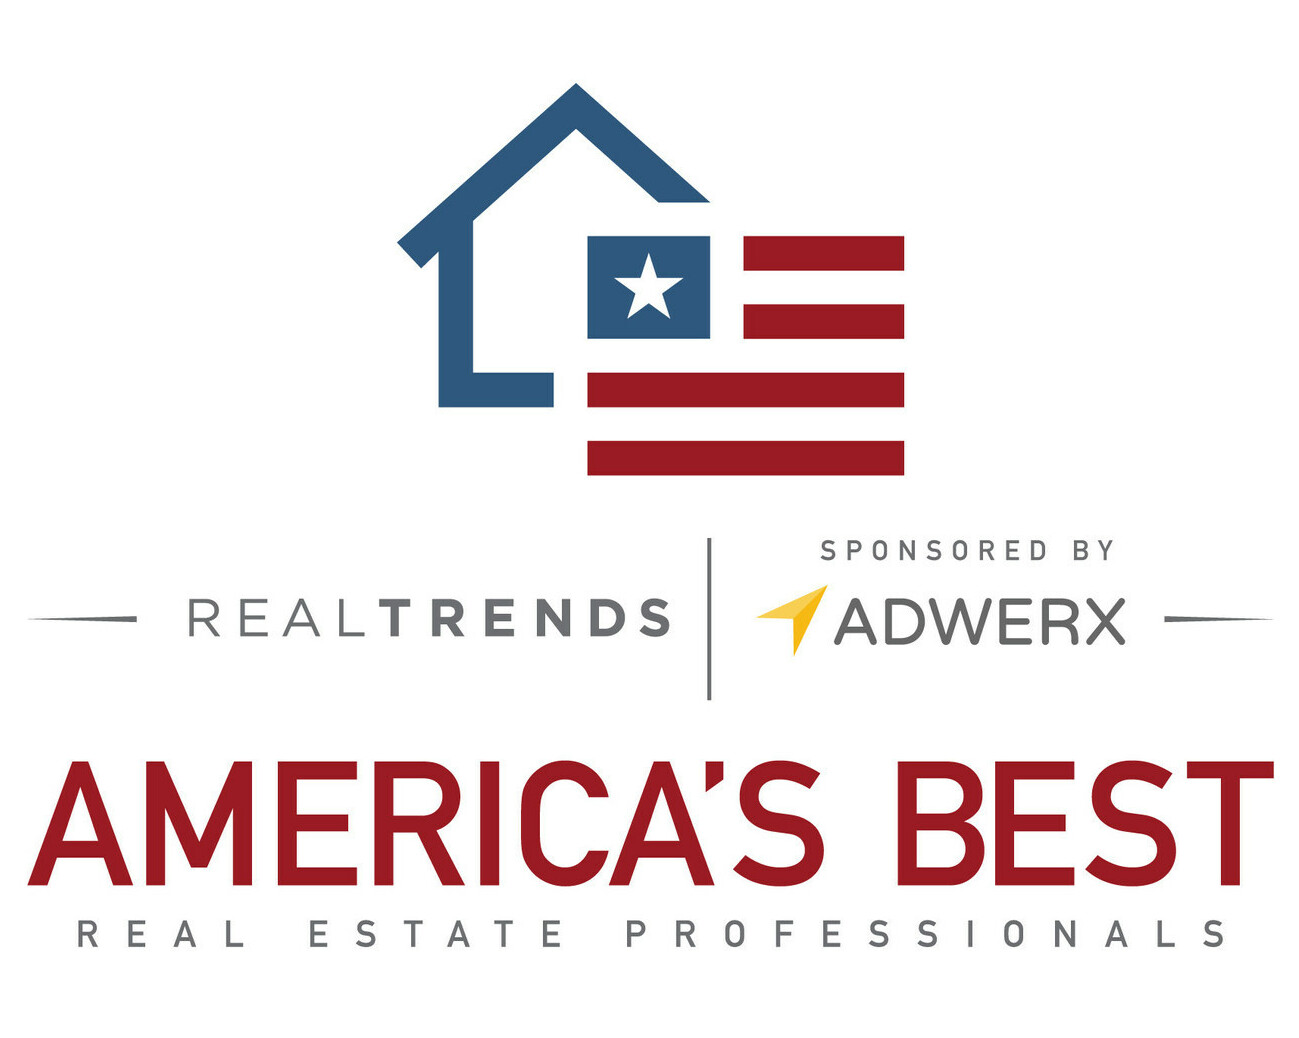 Realtrends America's best logo